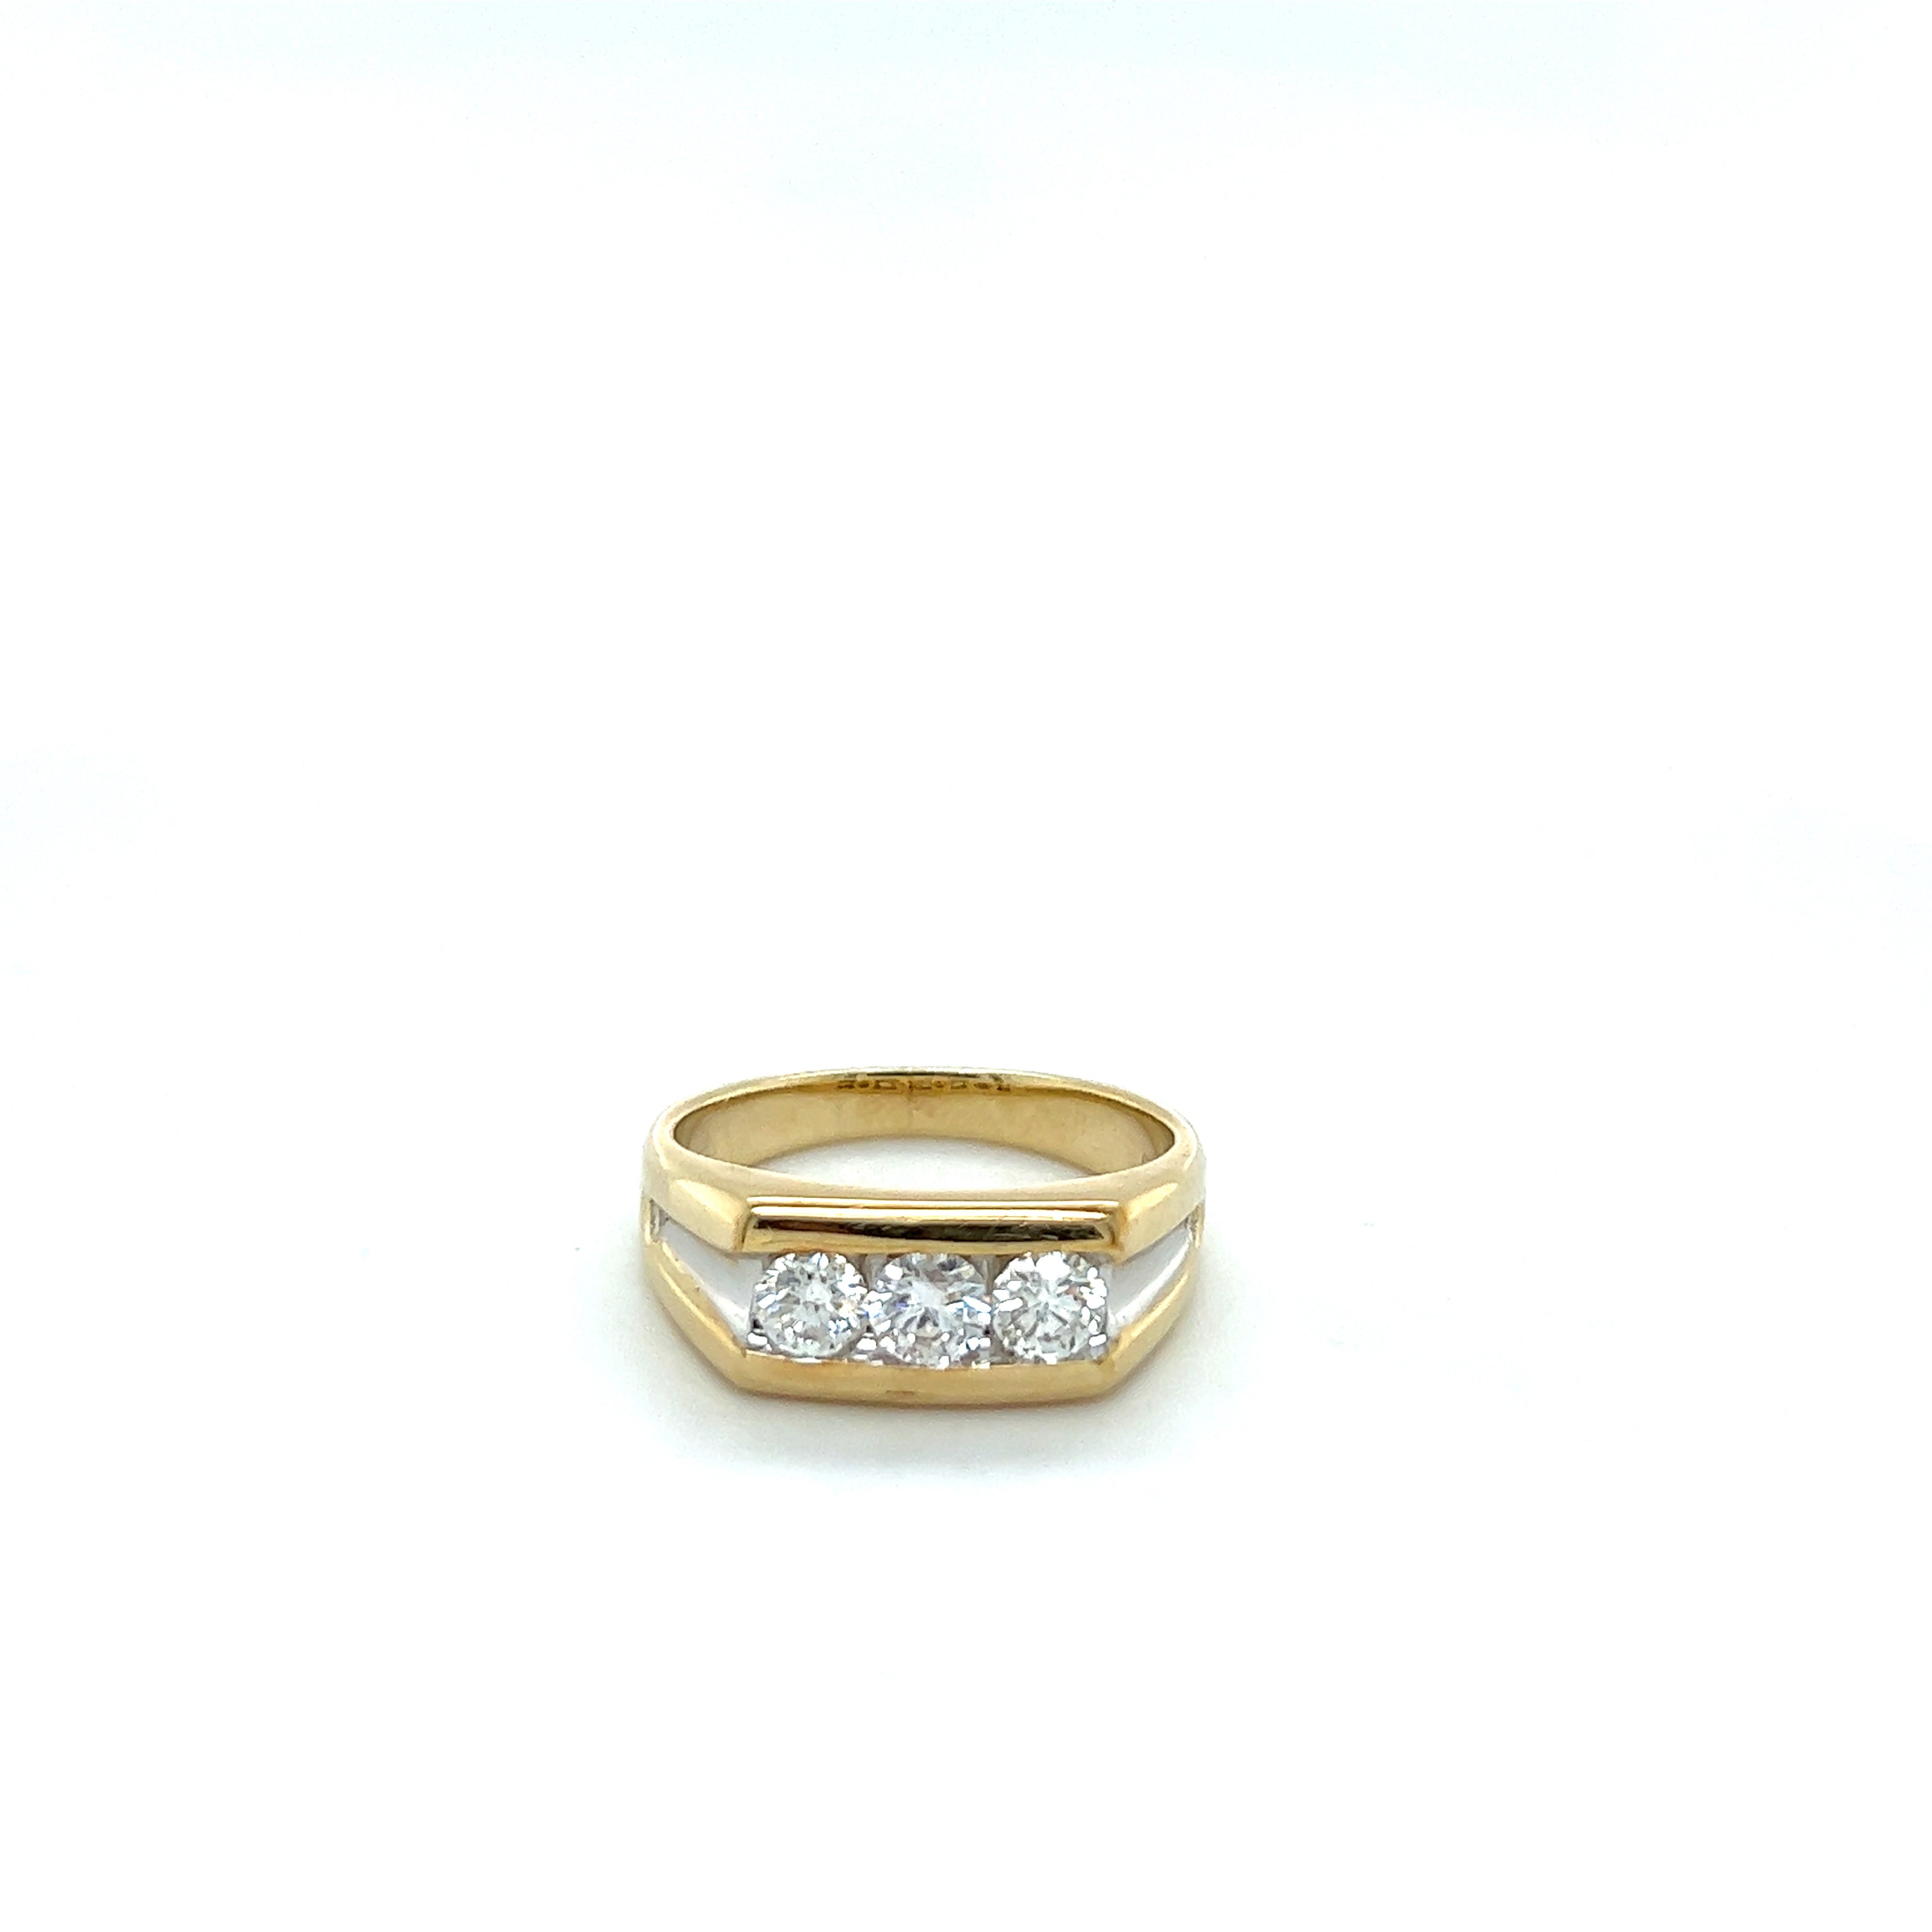 10ct yellow gold diamond ring.